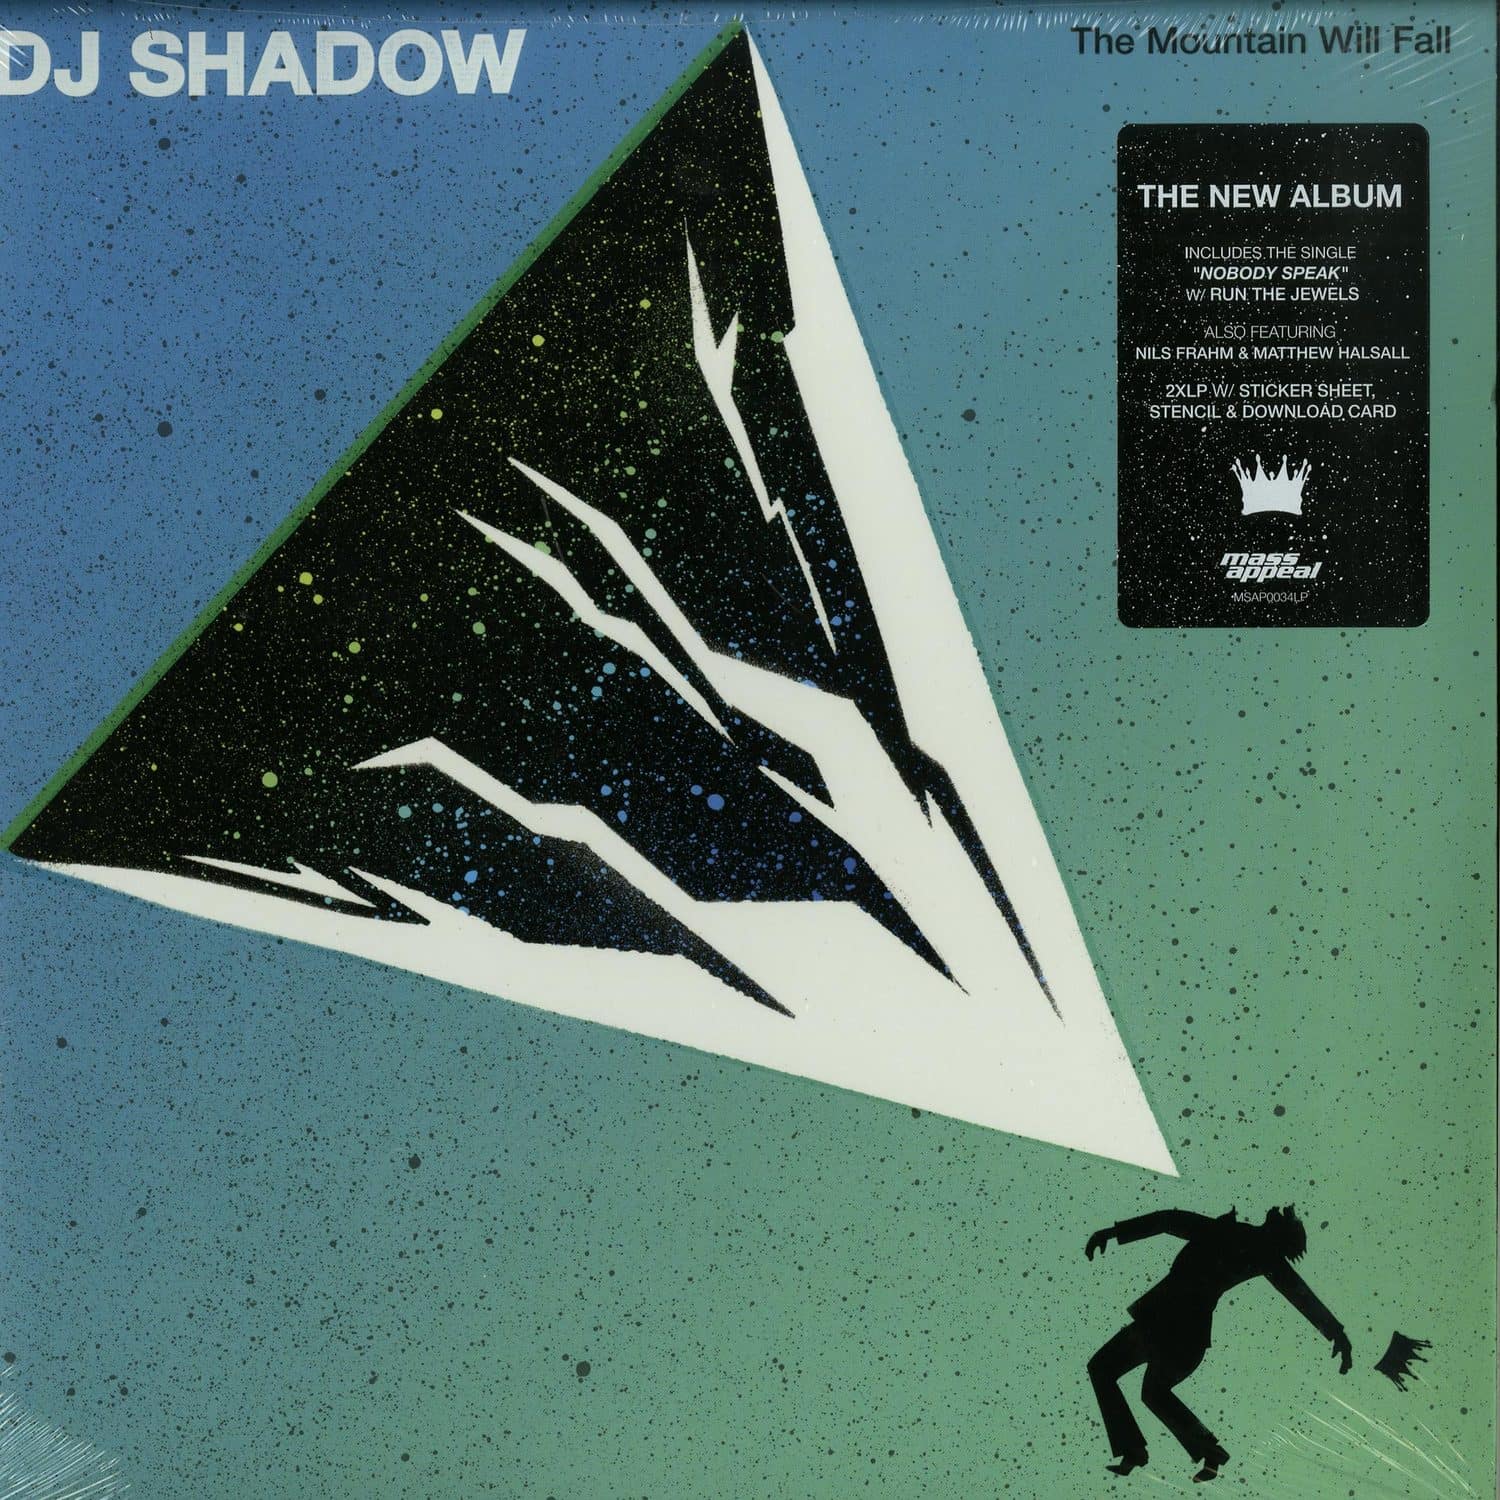 DJ Shadow - THE MOUNTAIN WILL FALL 